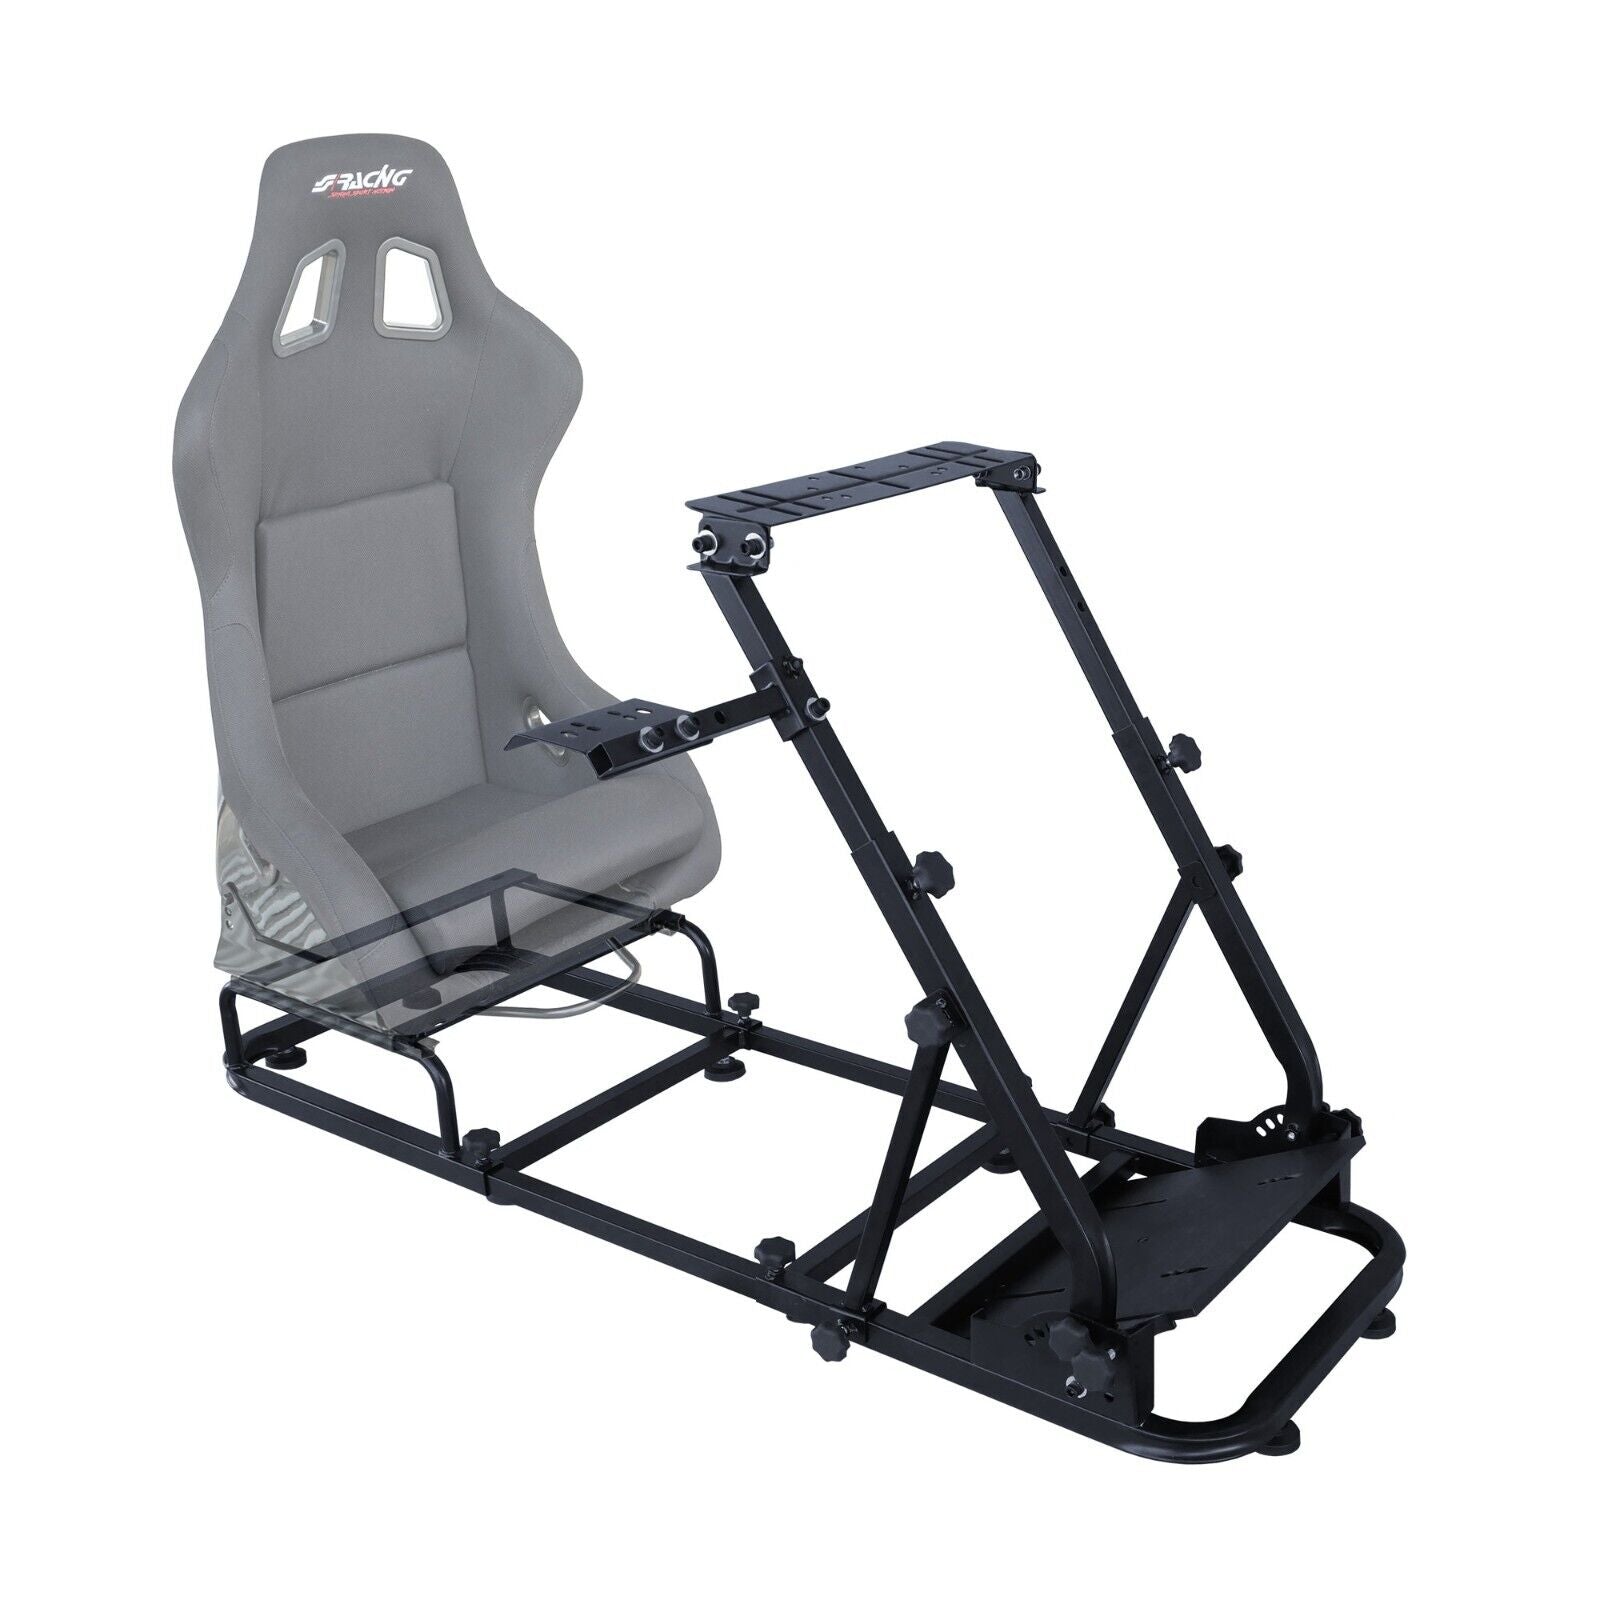 SR Fahrspiel Sim Racing Rahmengestell für Bildschirm, Sitz, Rad